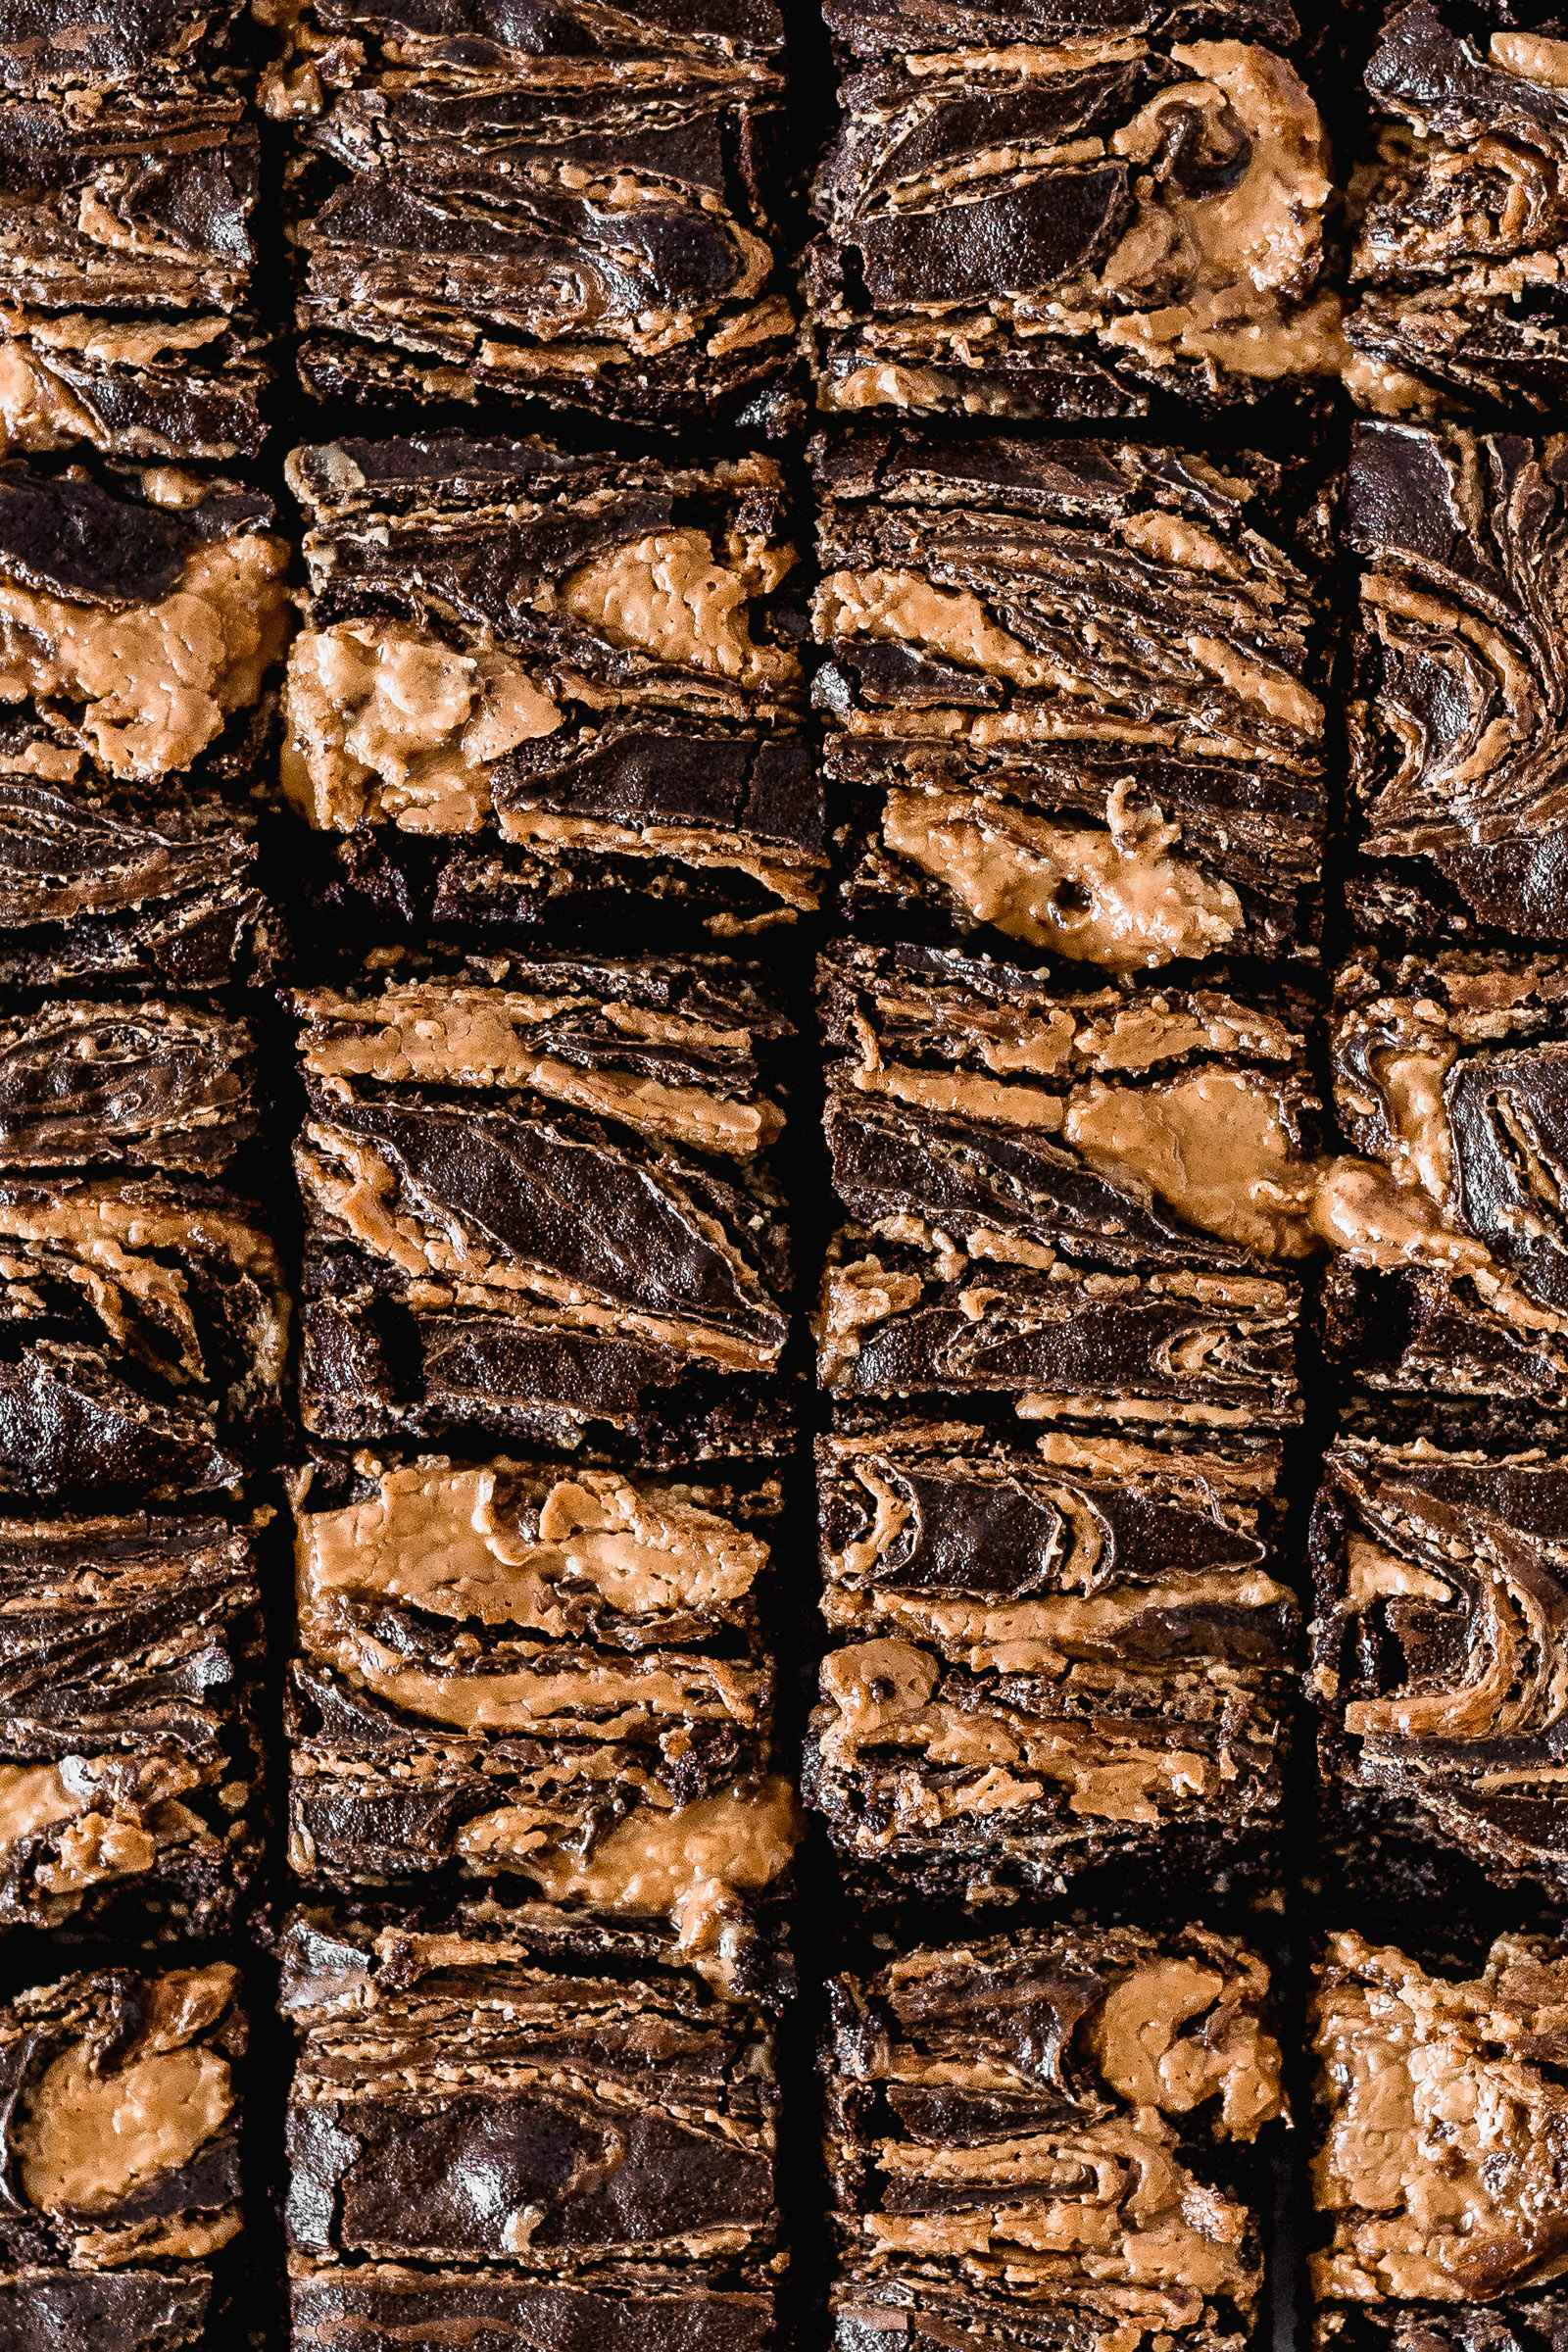 Closeup of the peanut butter swirl brownies.